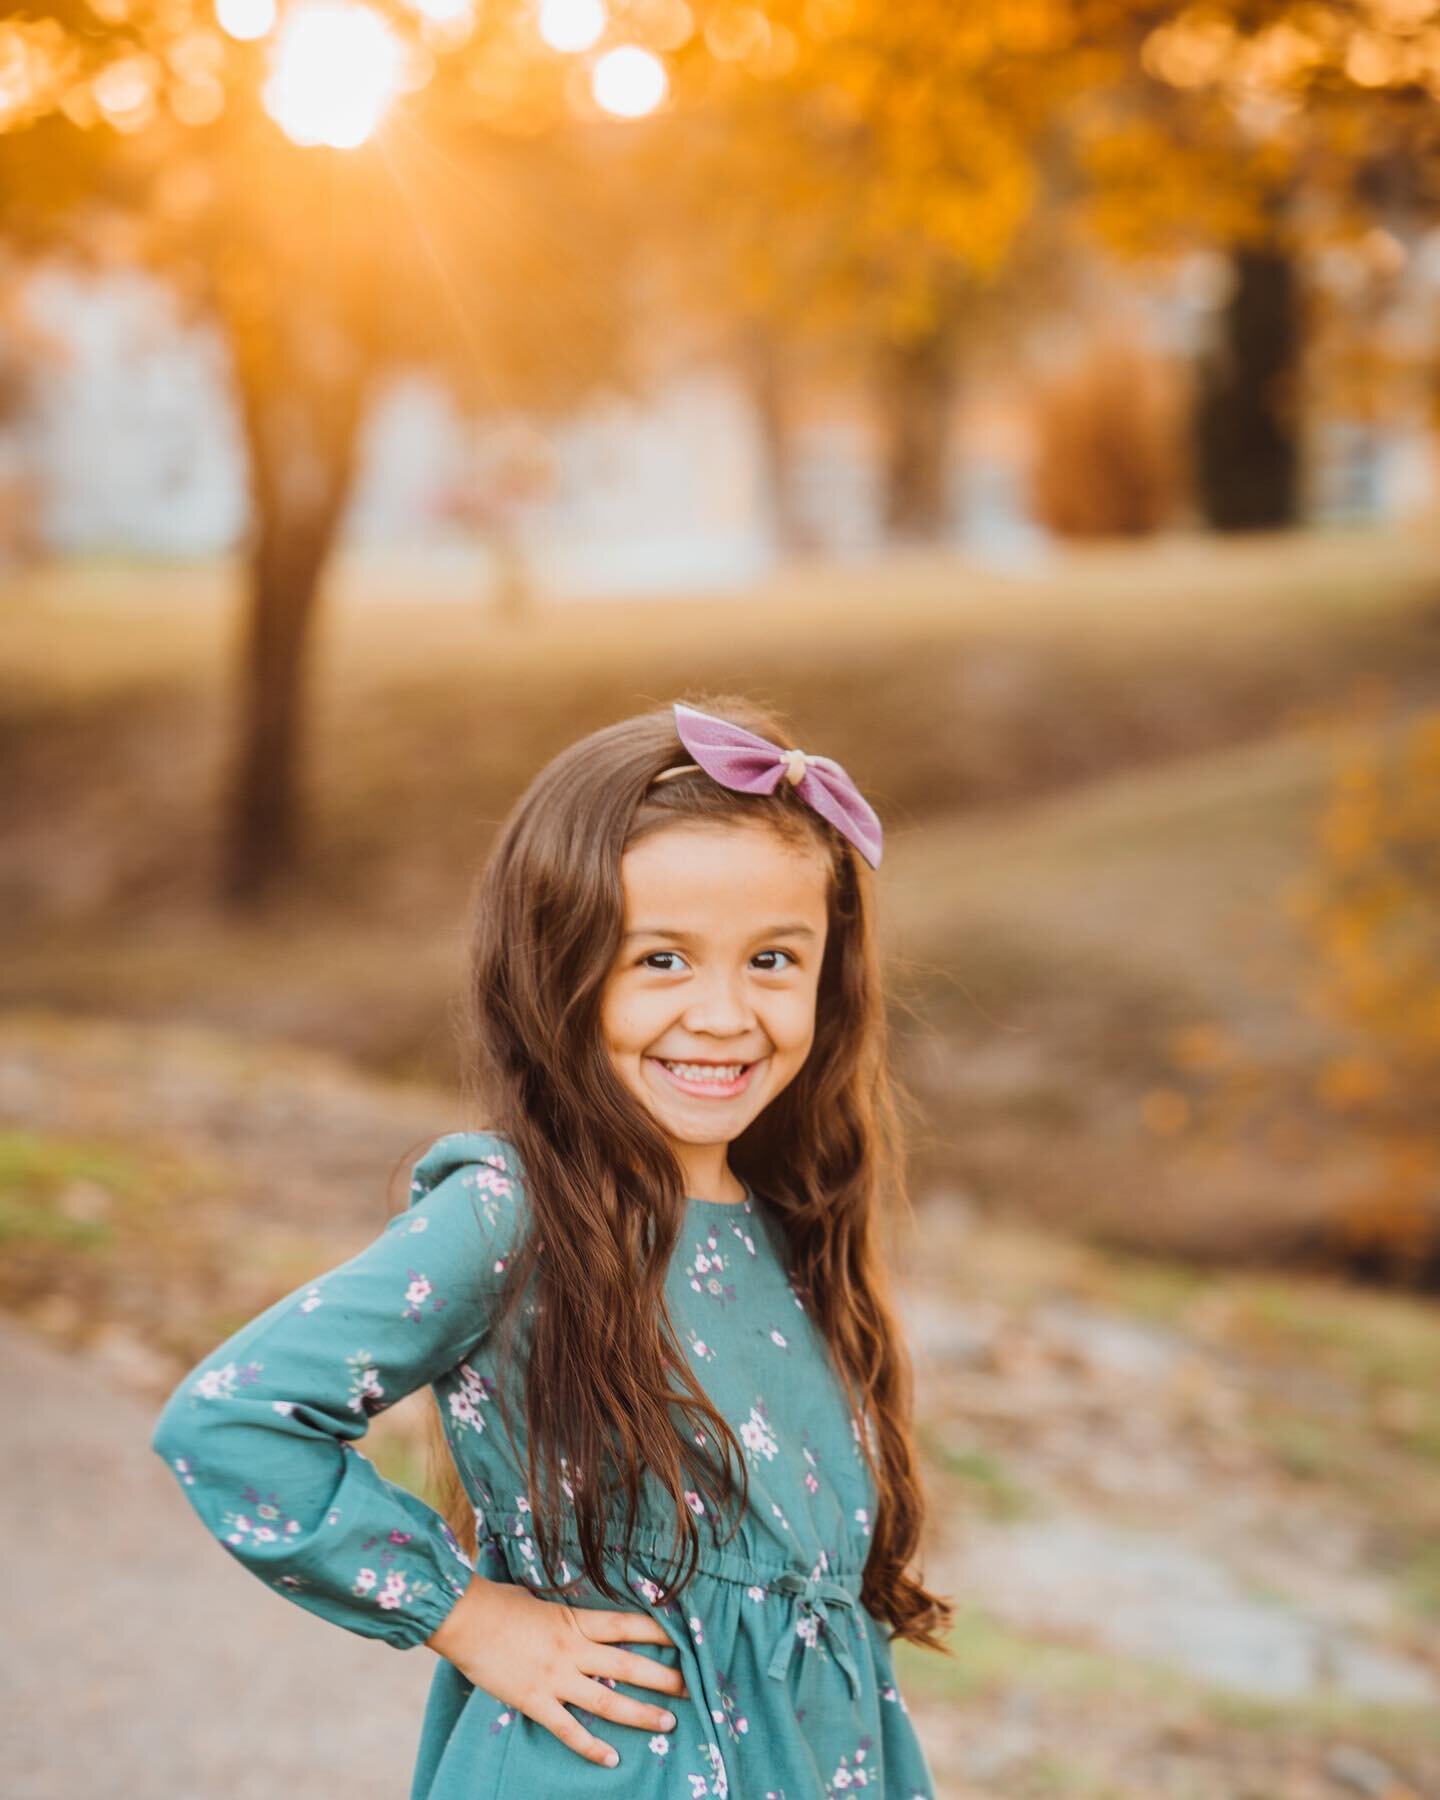 She shines bright! 
.
.
.
#childrenphotography #familyphotography #familyphotographer #goldenhour #naturallight #nature